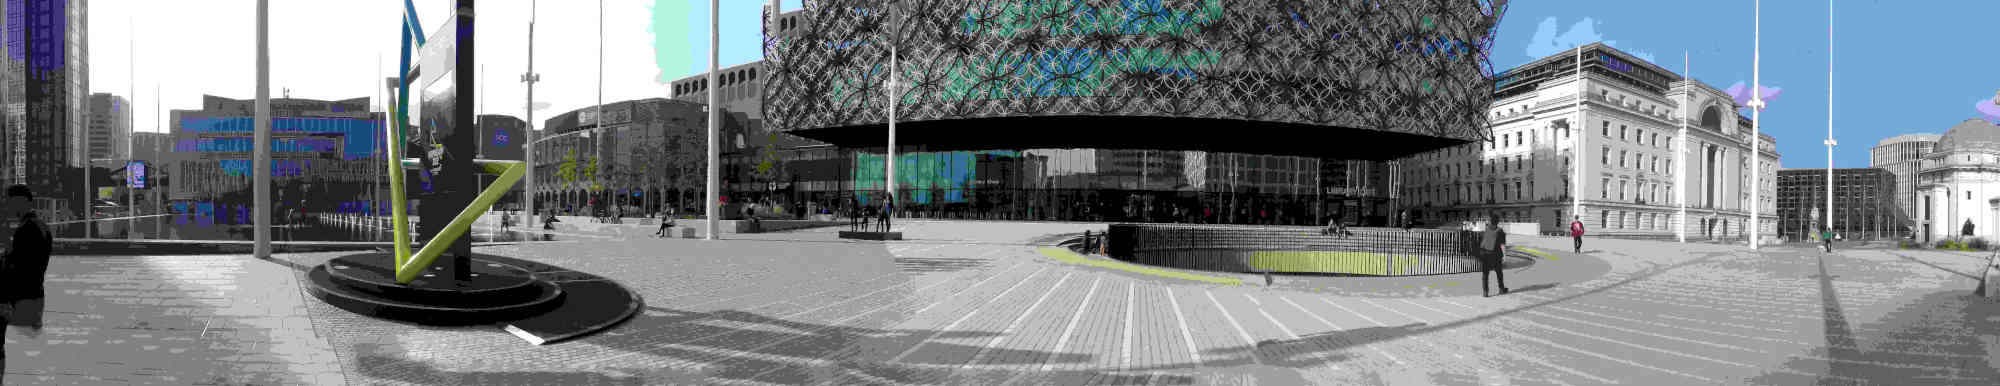 ImagesBirmingham/Birmingham Broad Street Centenary Square Panorama.jpg